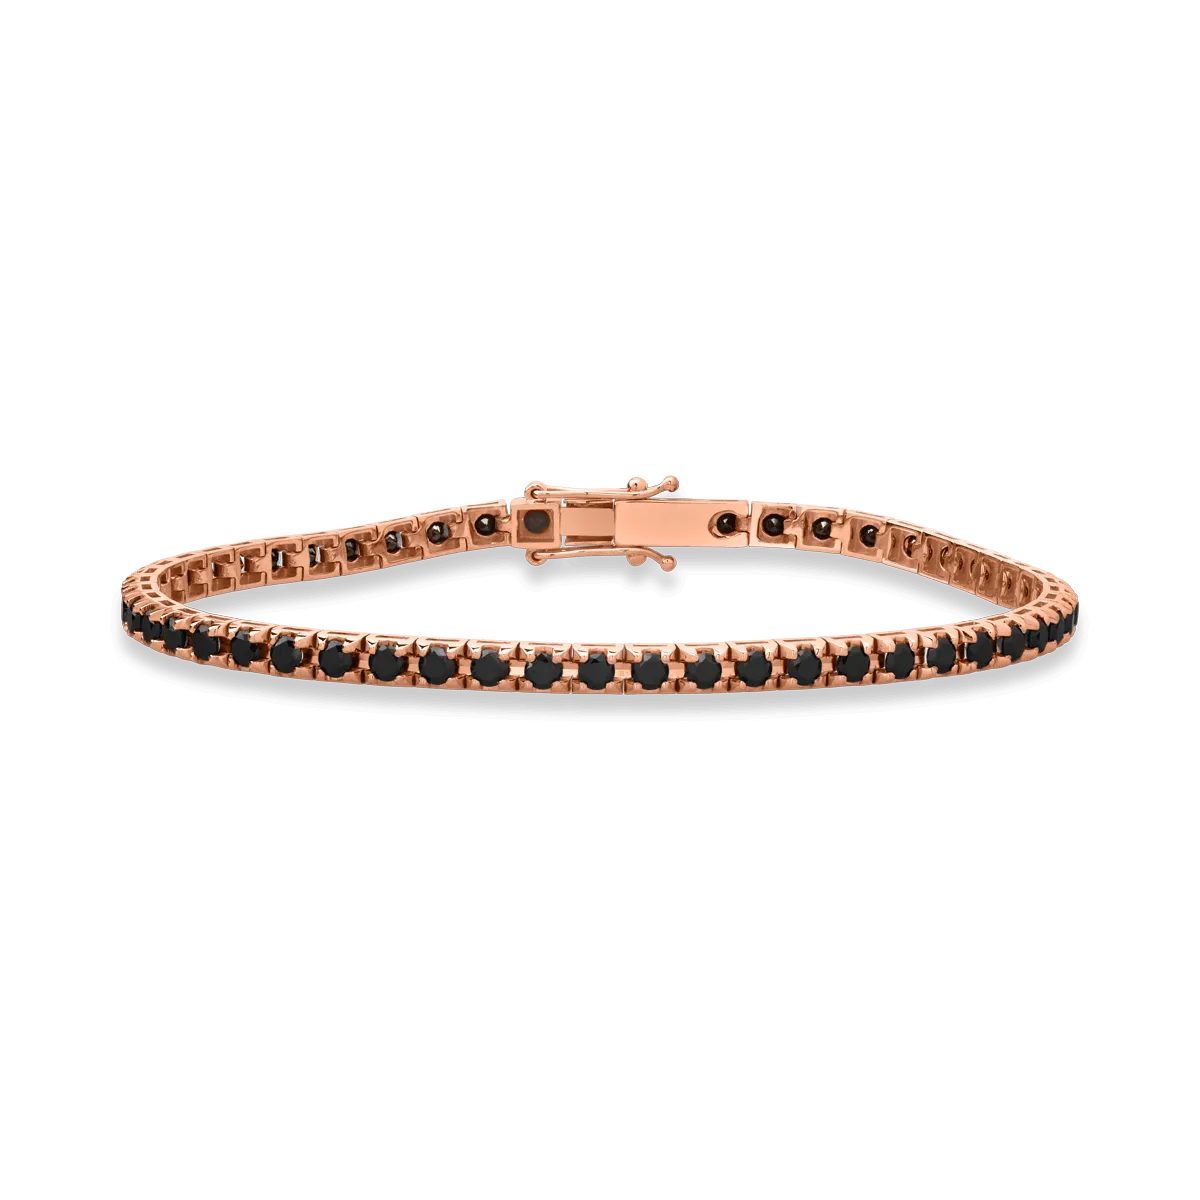 18K rose gold tennis bracelet with 2.75ct black diamonds